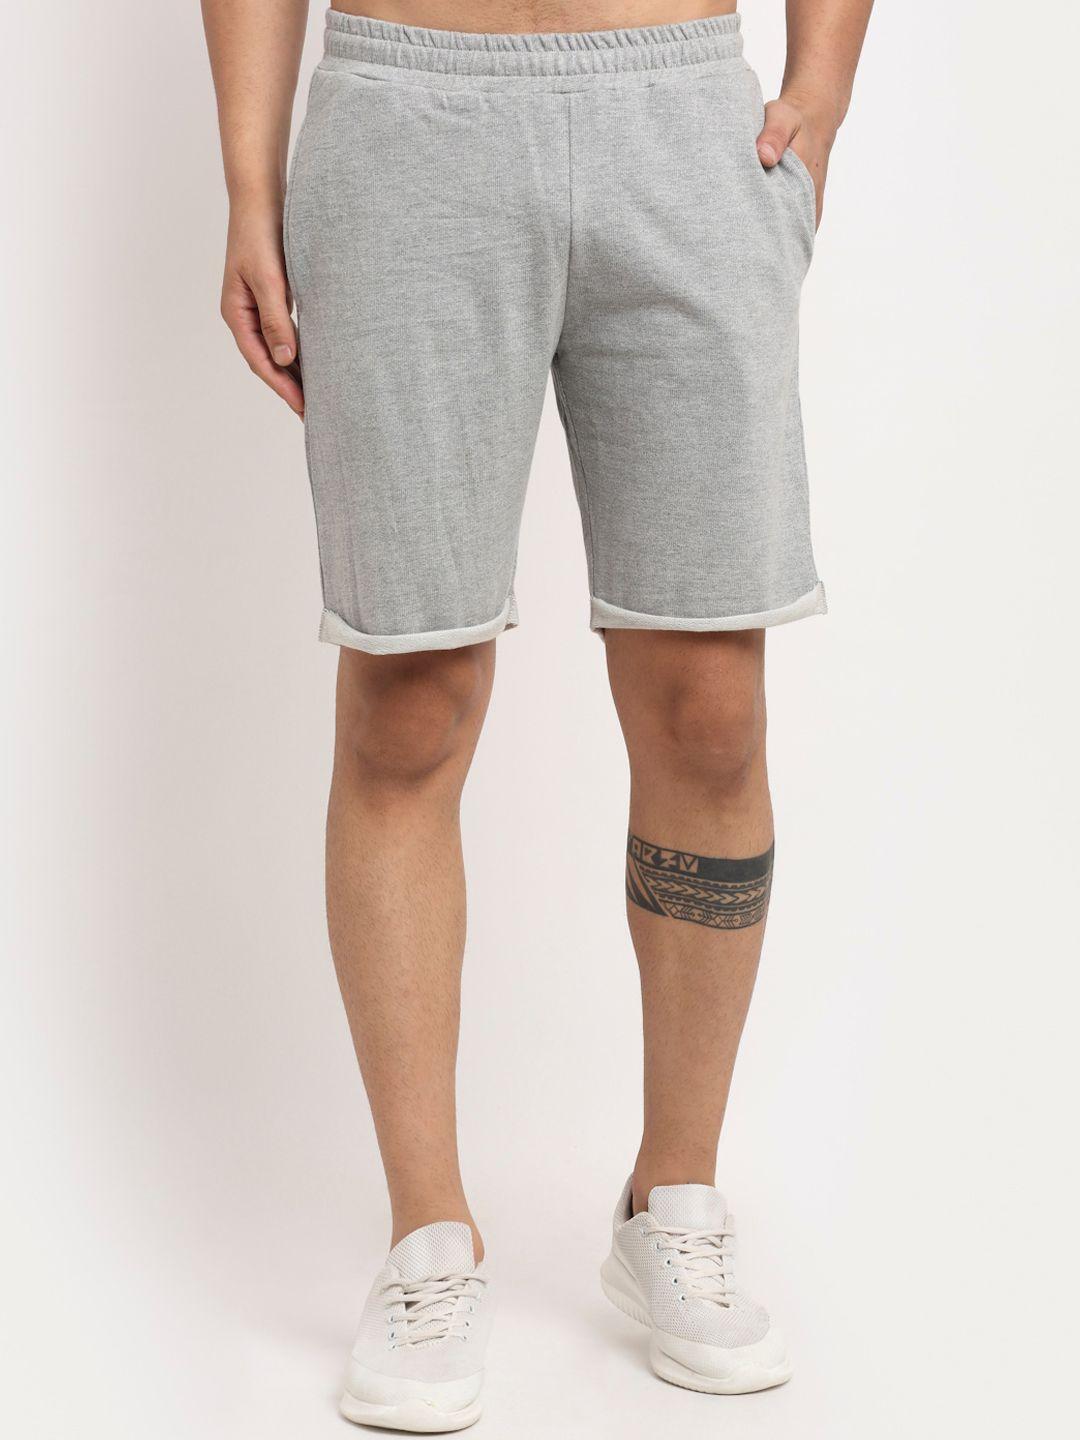 door74 men grey loose fit cotton shorts